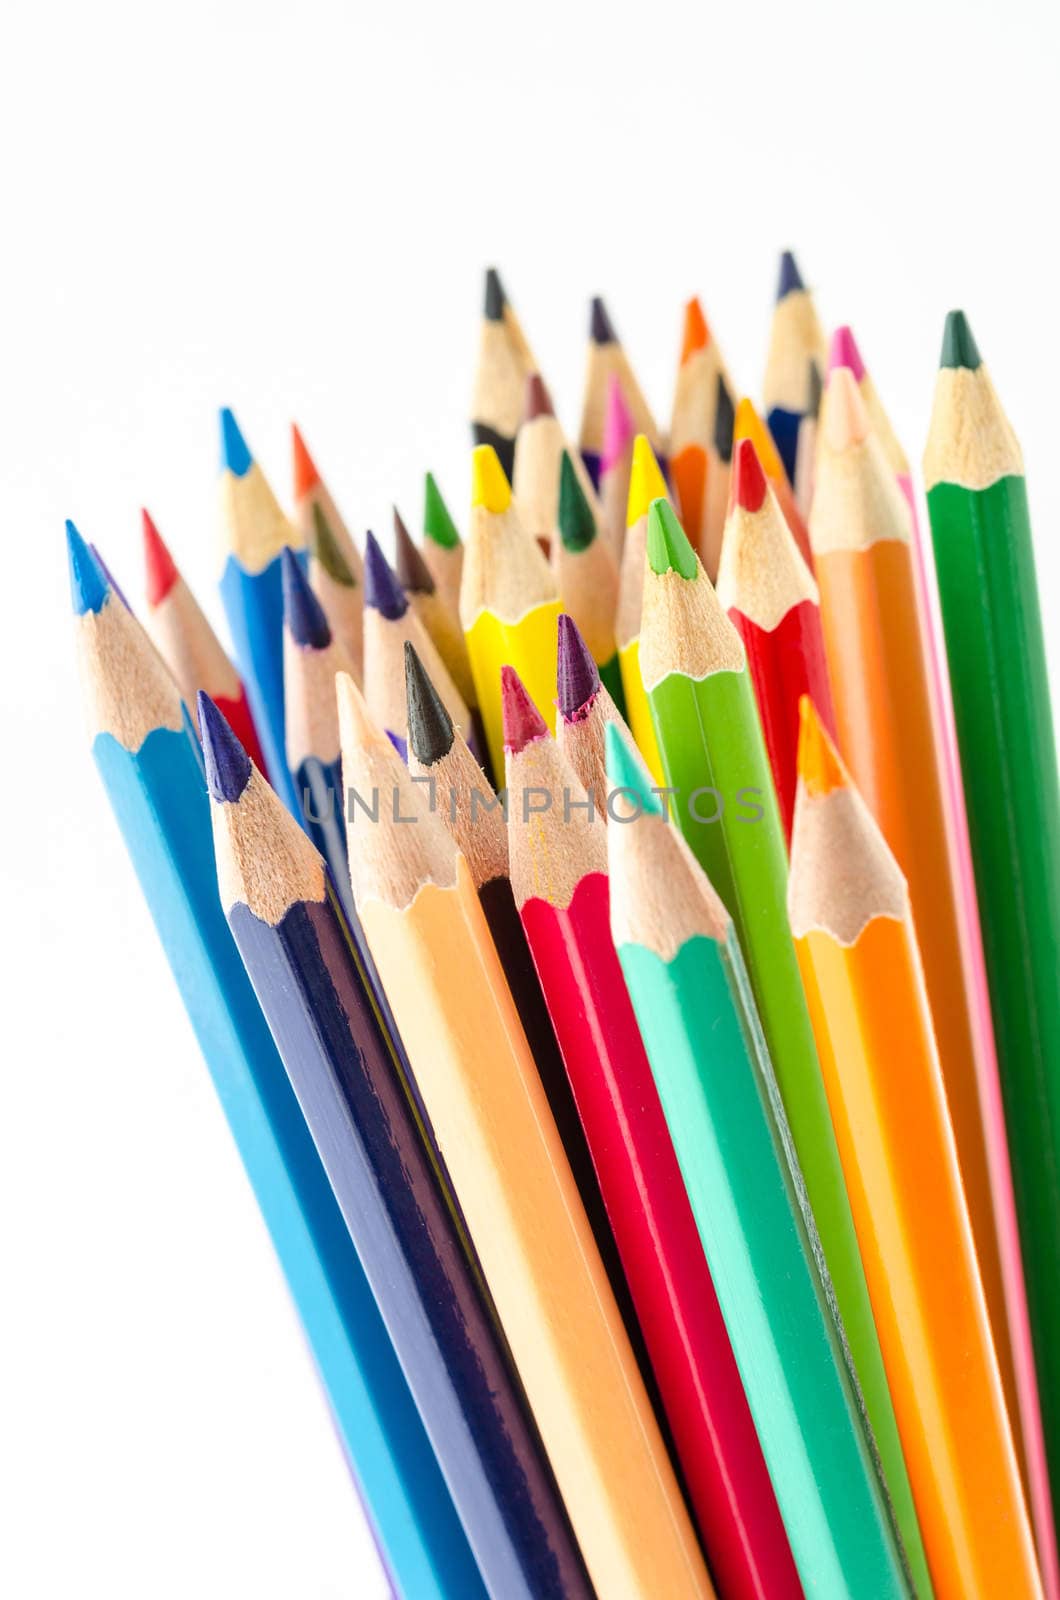 Colouring crayon pencils. by Gamjai